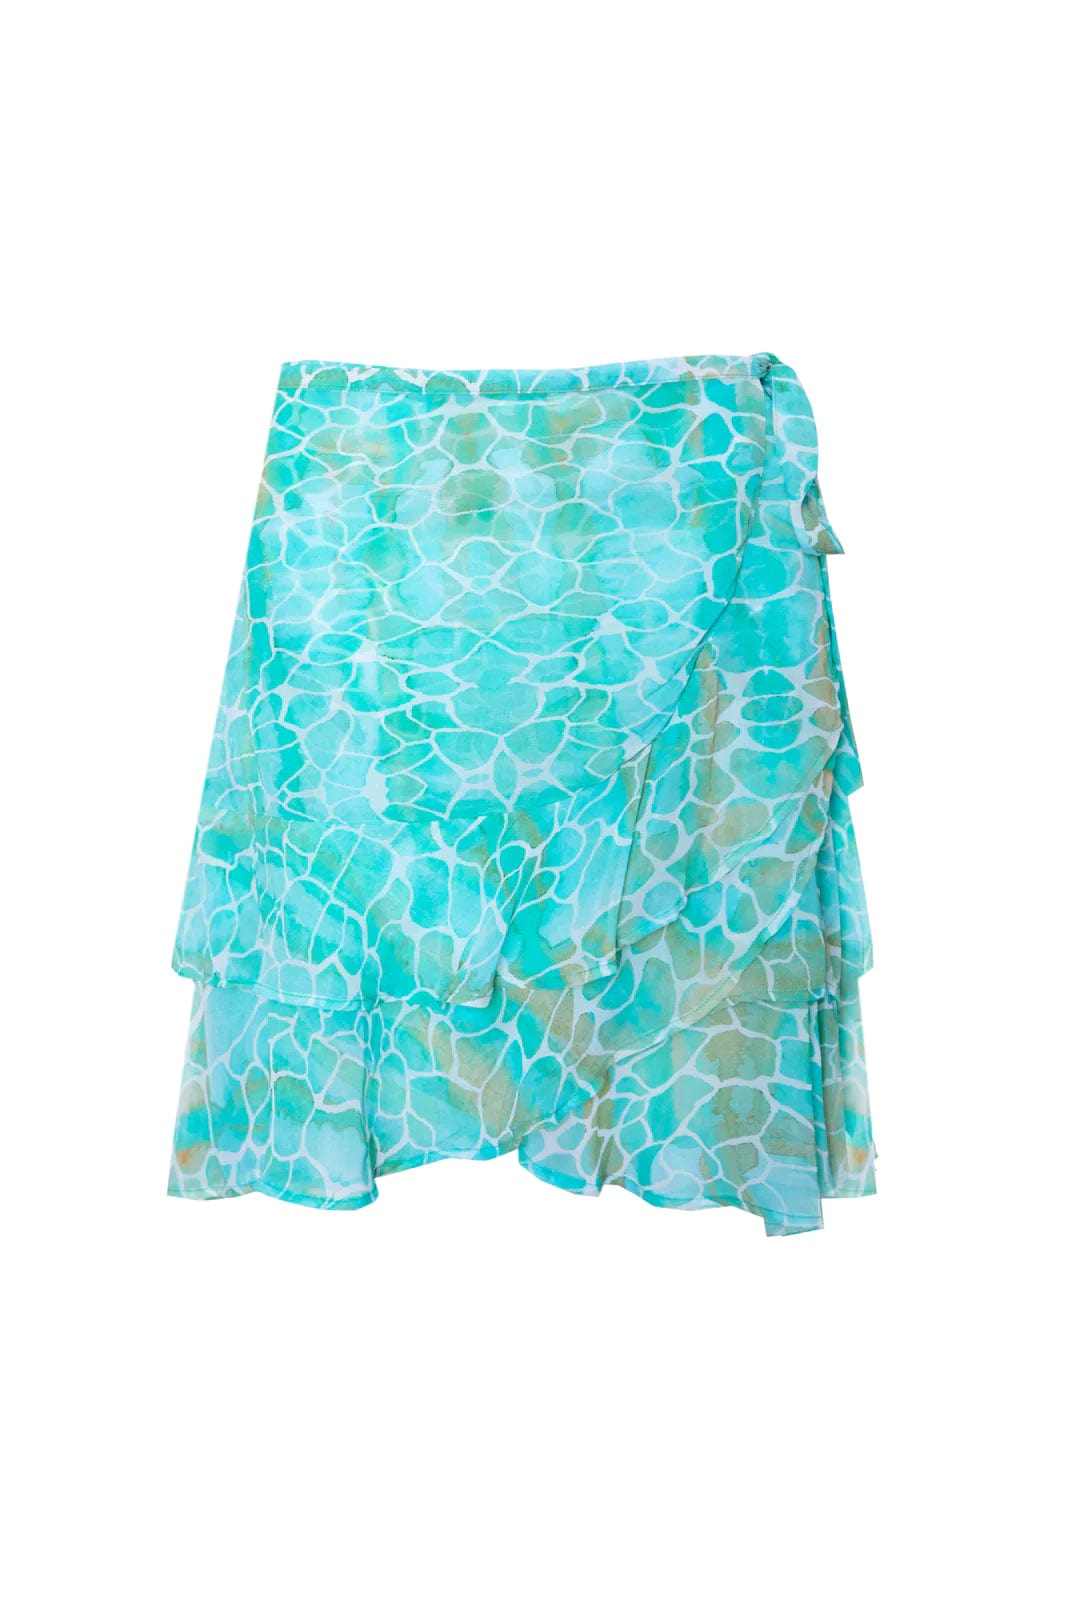 Sophia Alexia S Aqua Pebbles Tahiti Wrap Skirt